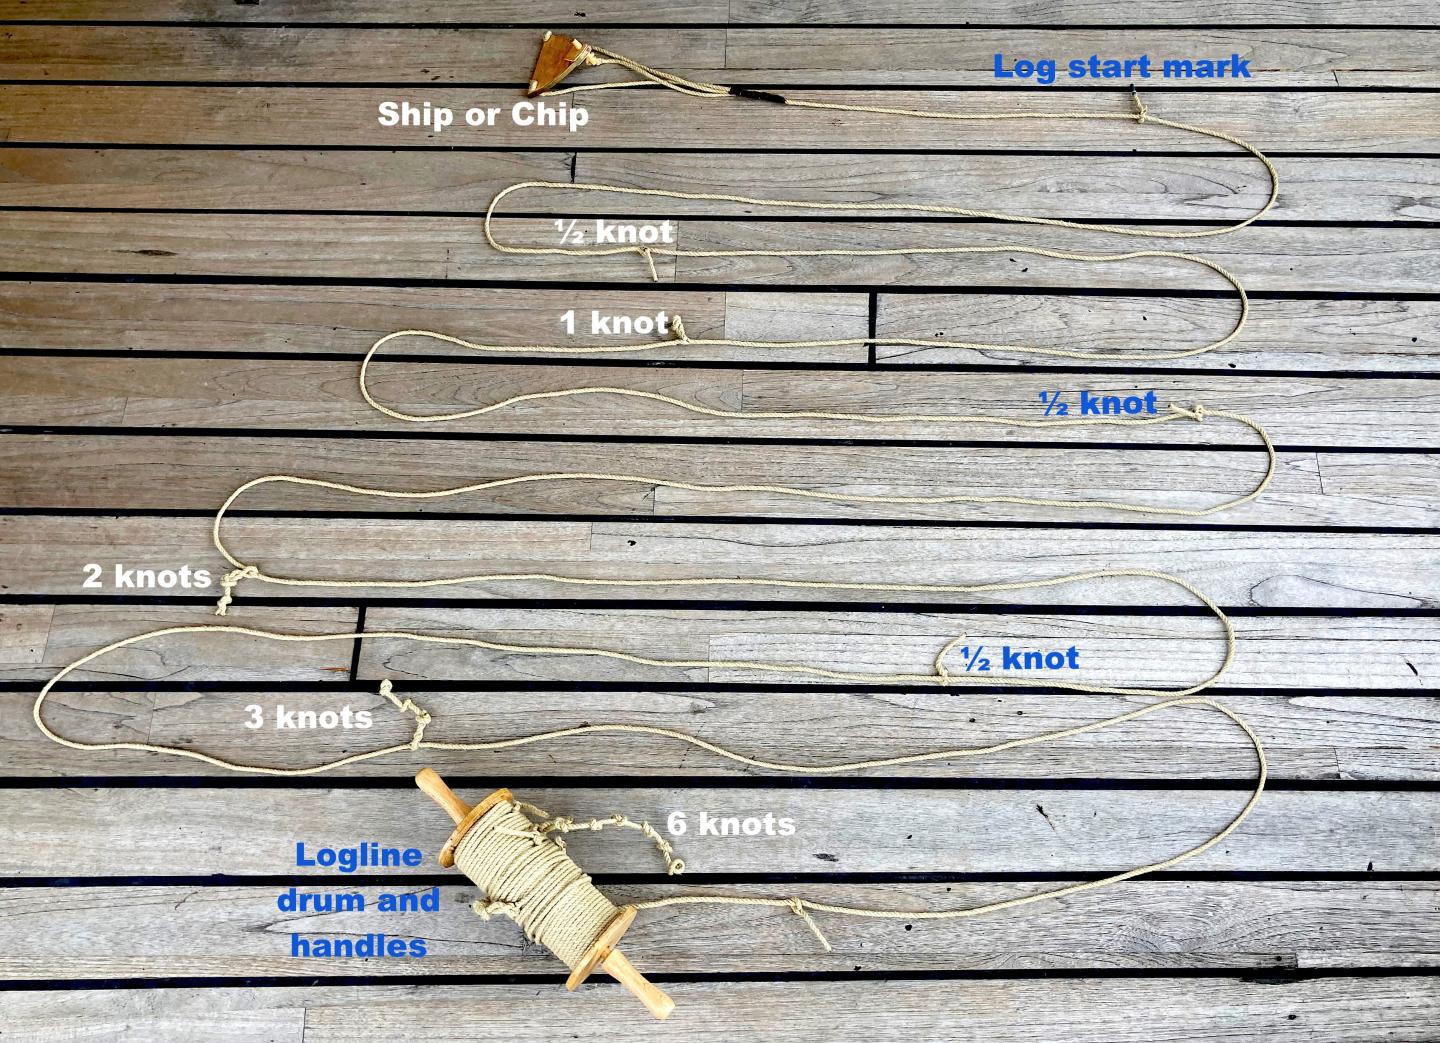 Log line on weather deck showing markings